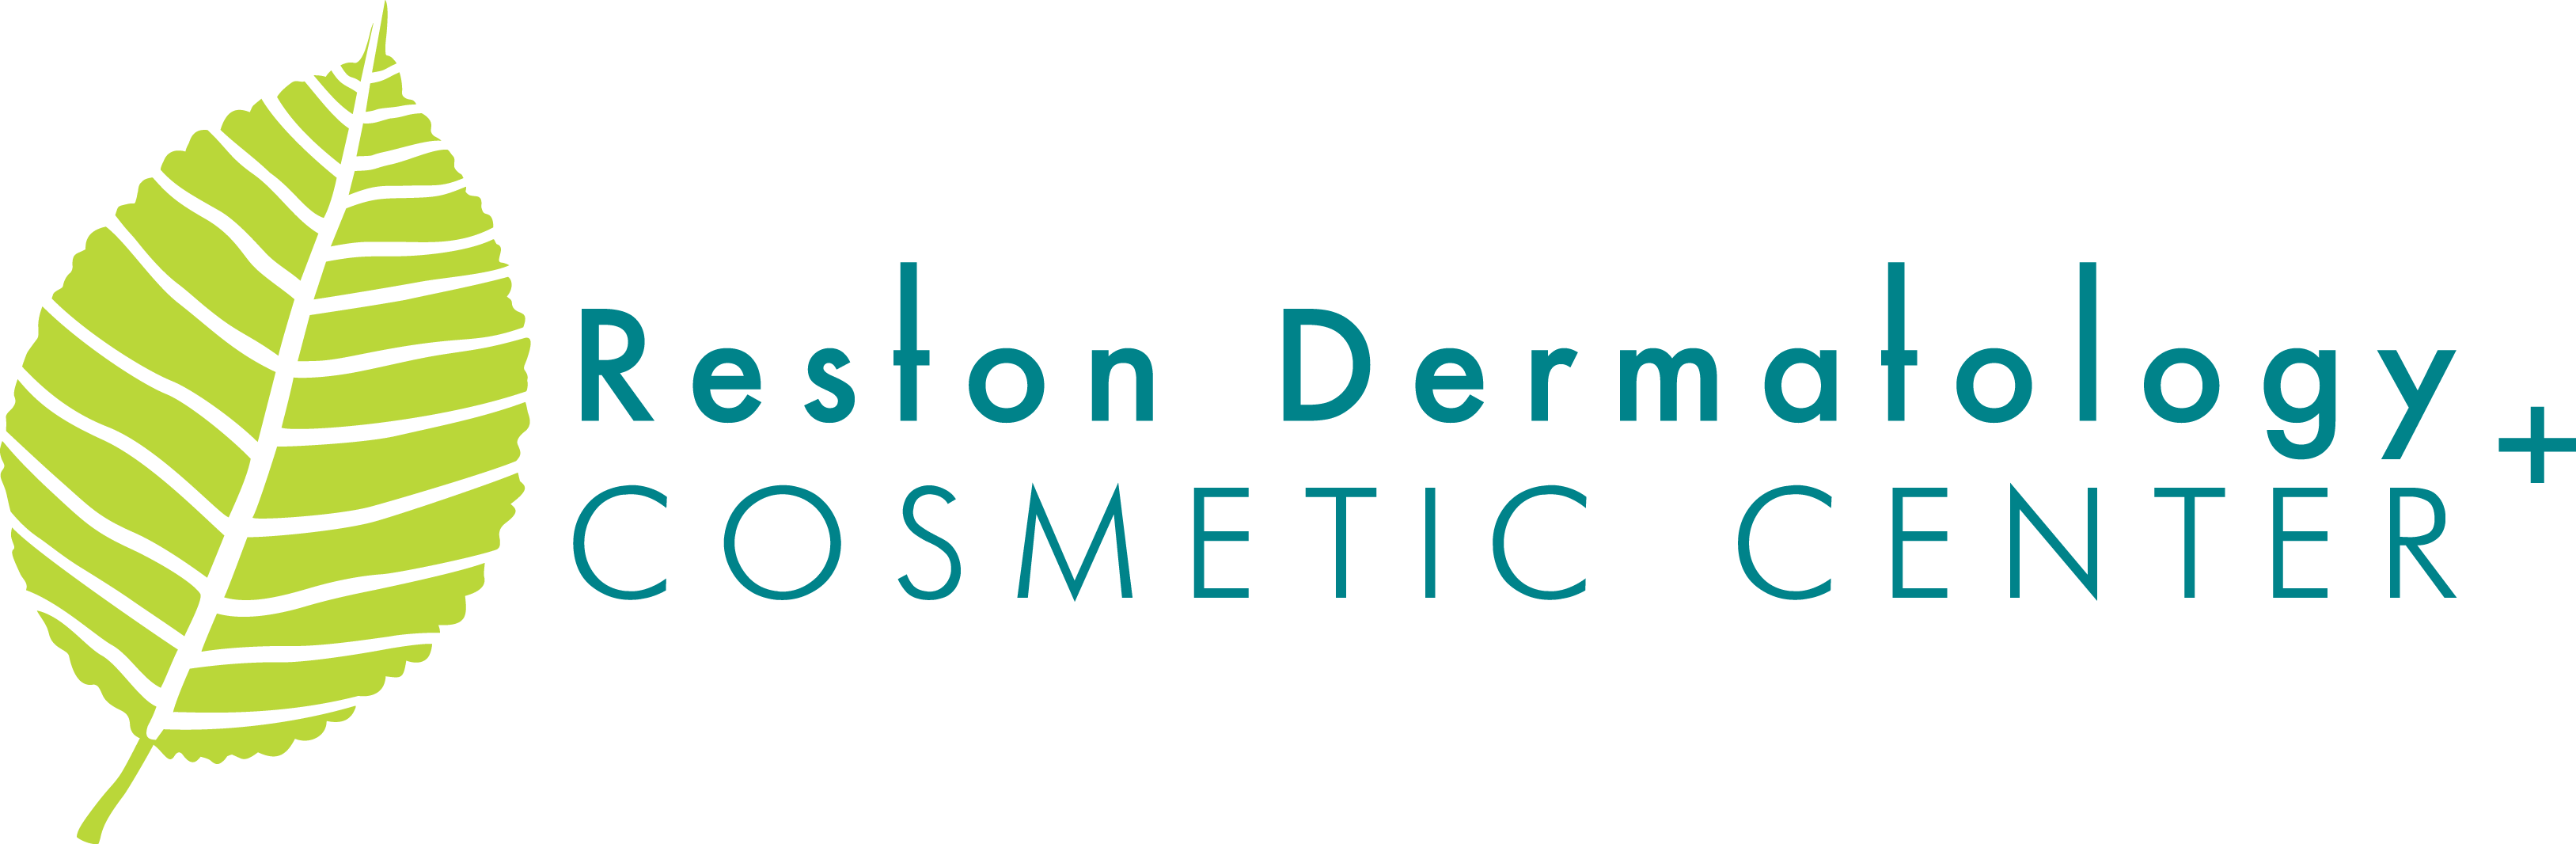 Reston Dermatology & Cosmetic Center